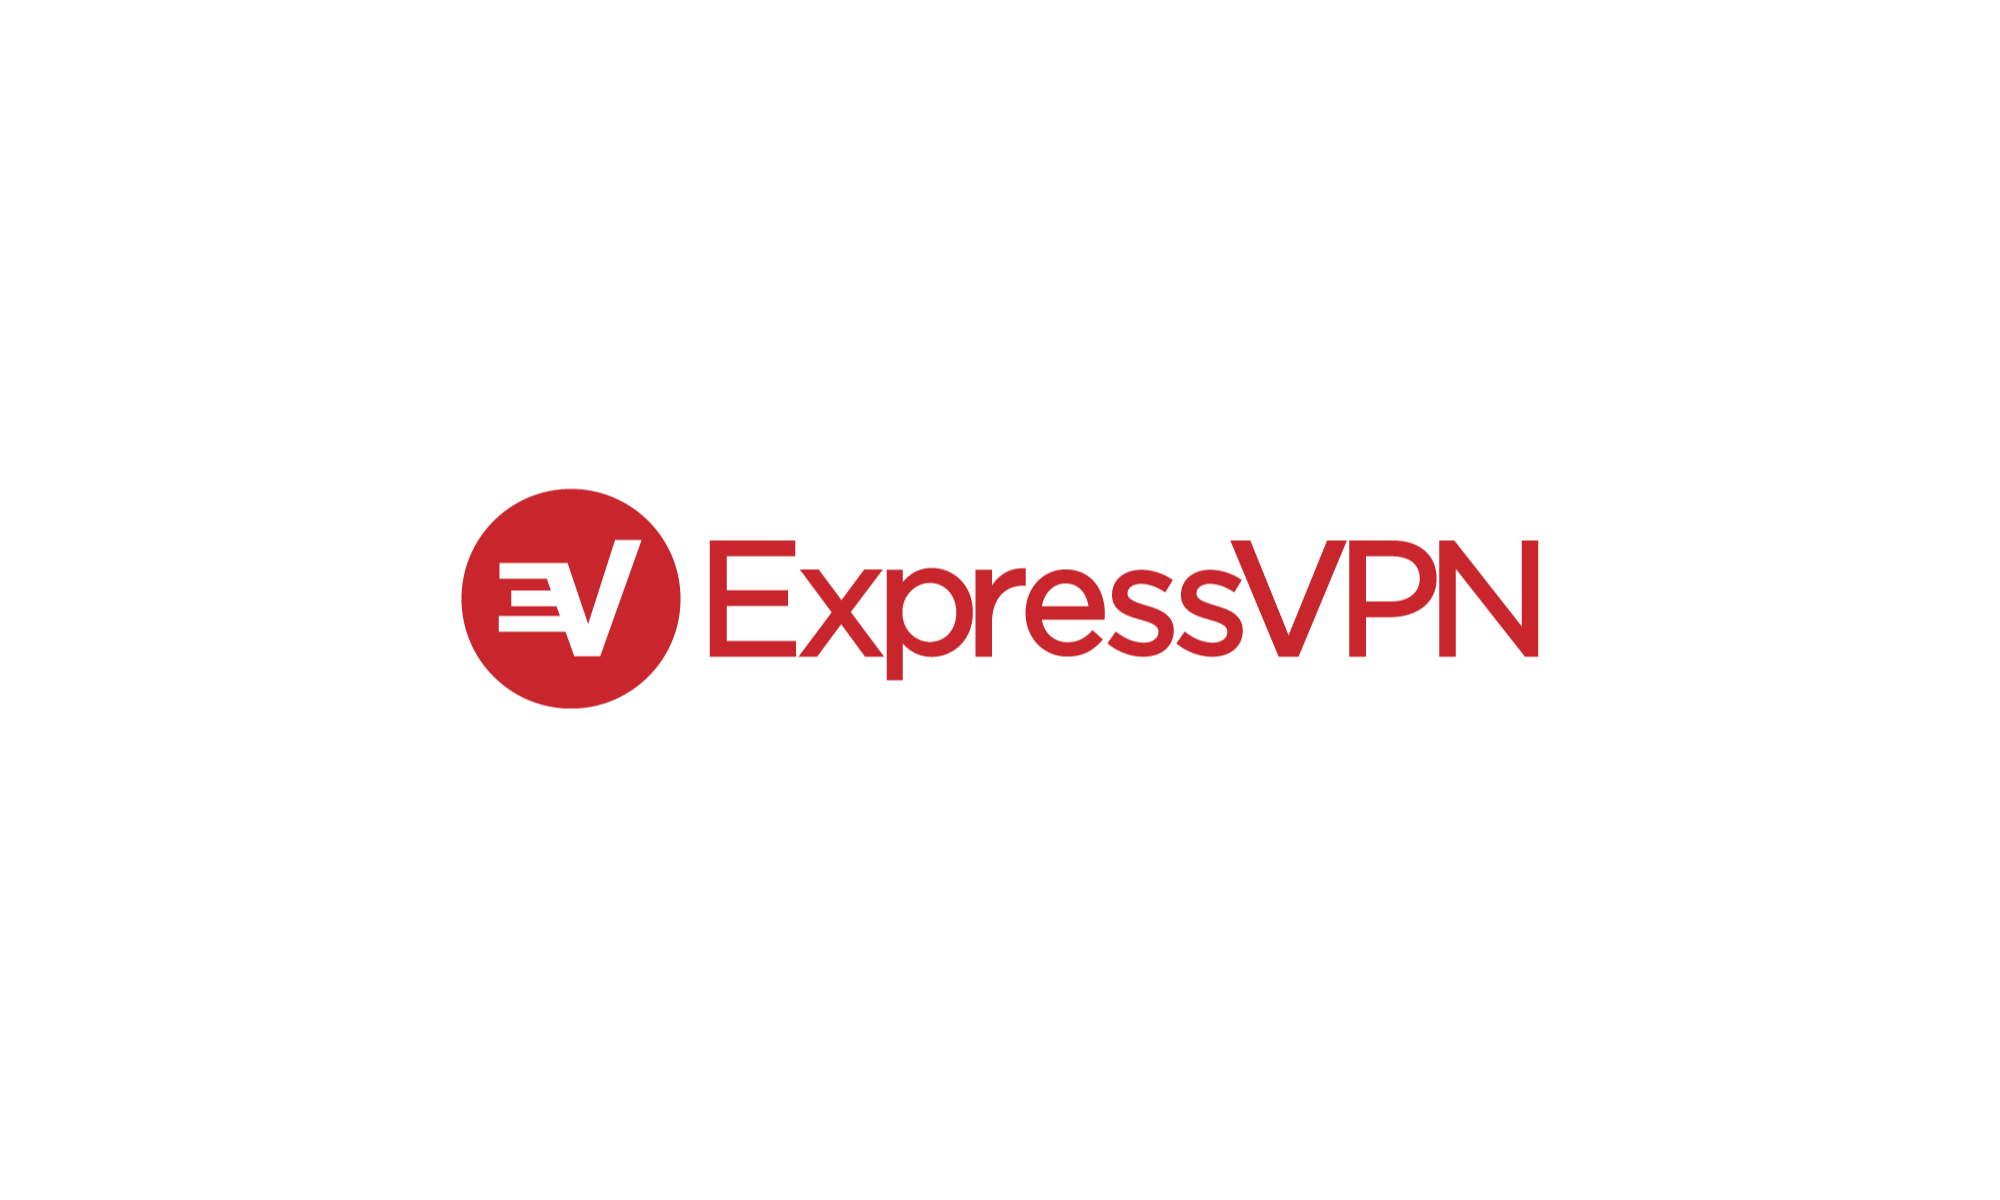 Express vpn код. Экспресс VPN. EXPRESSVPN логотип. EXPRESSVPN О VPN. Express VPN картинки.